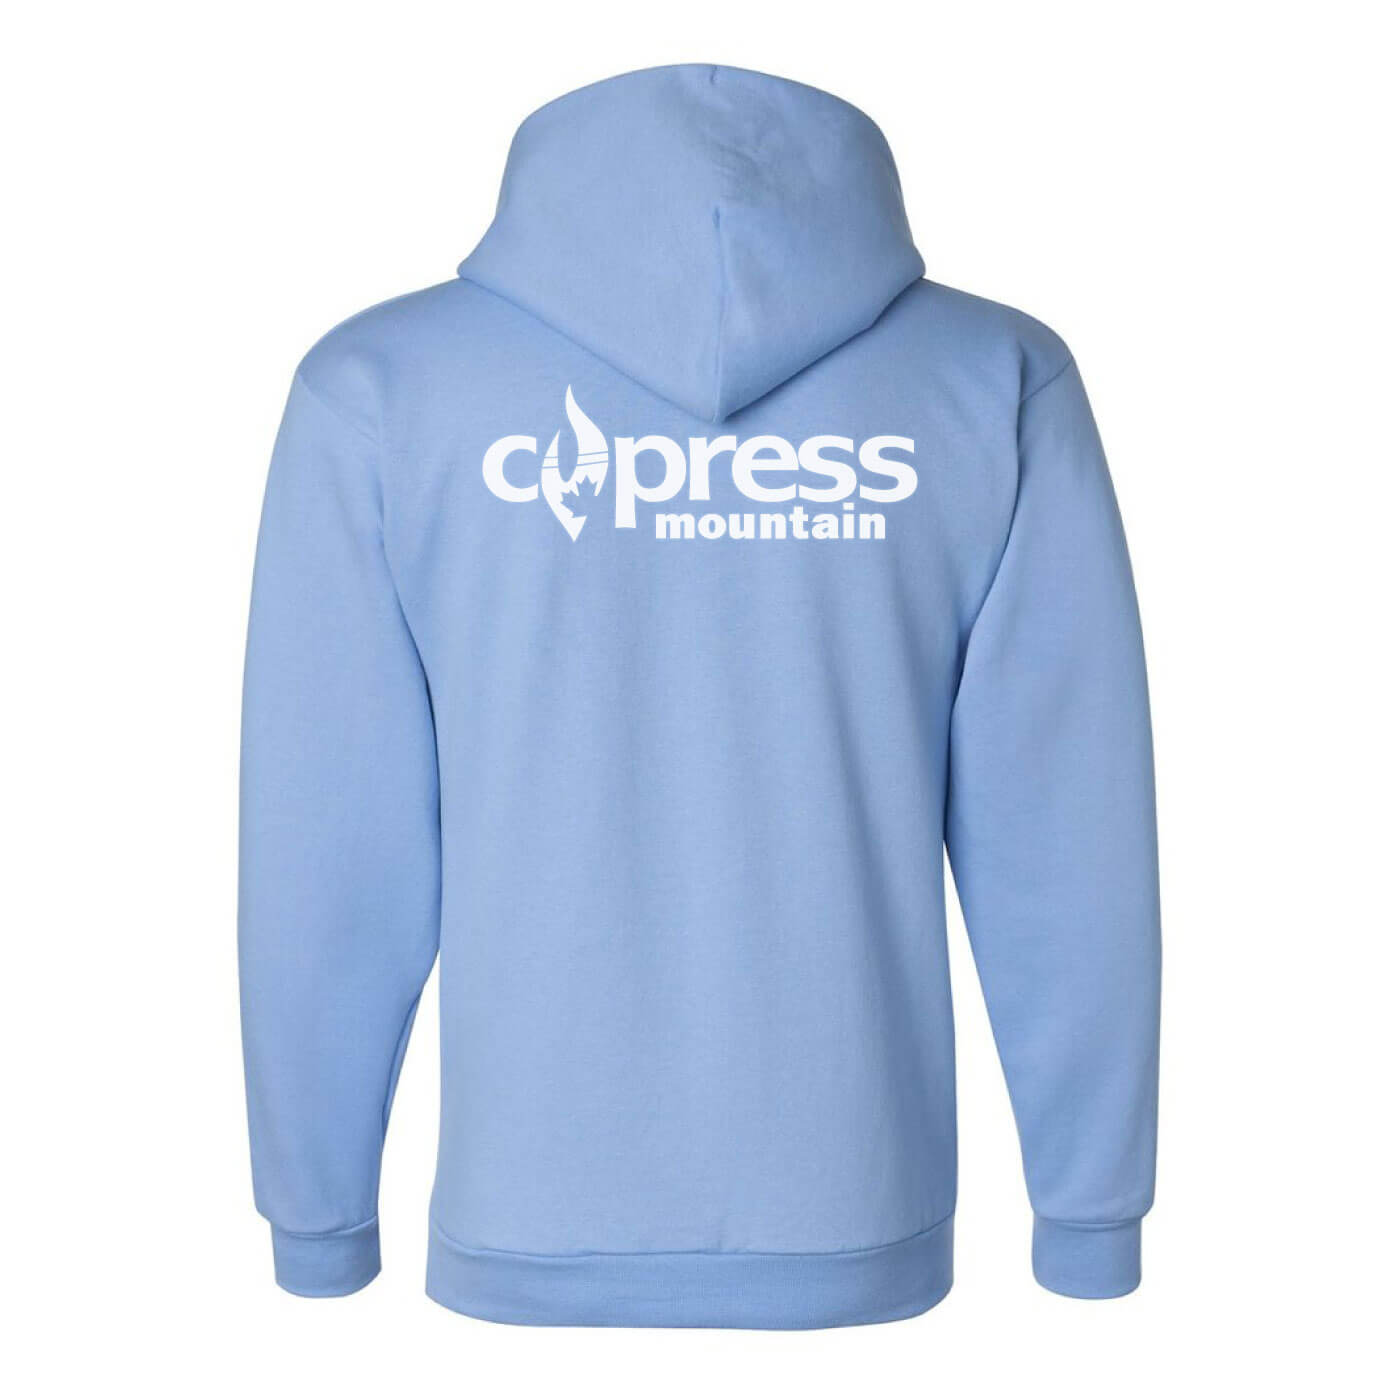 Cypress Mountain Eco Powerblend 2 Logo Hoodie 